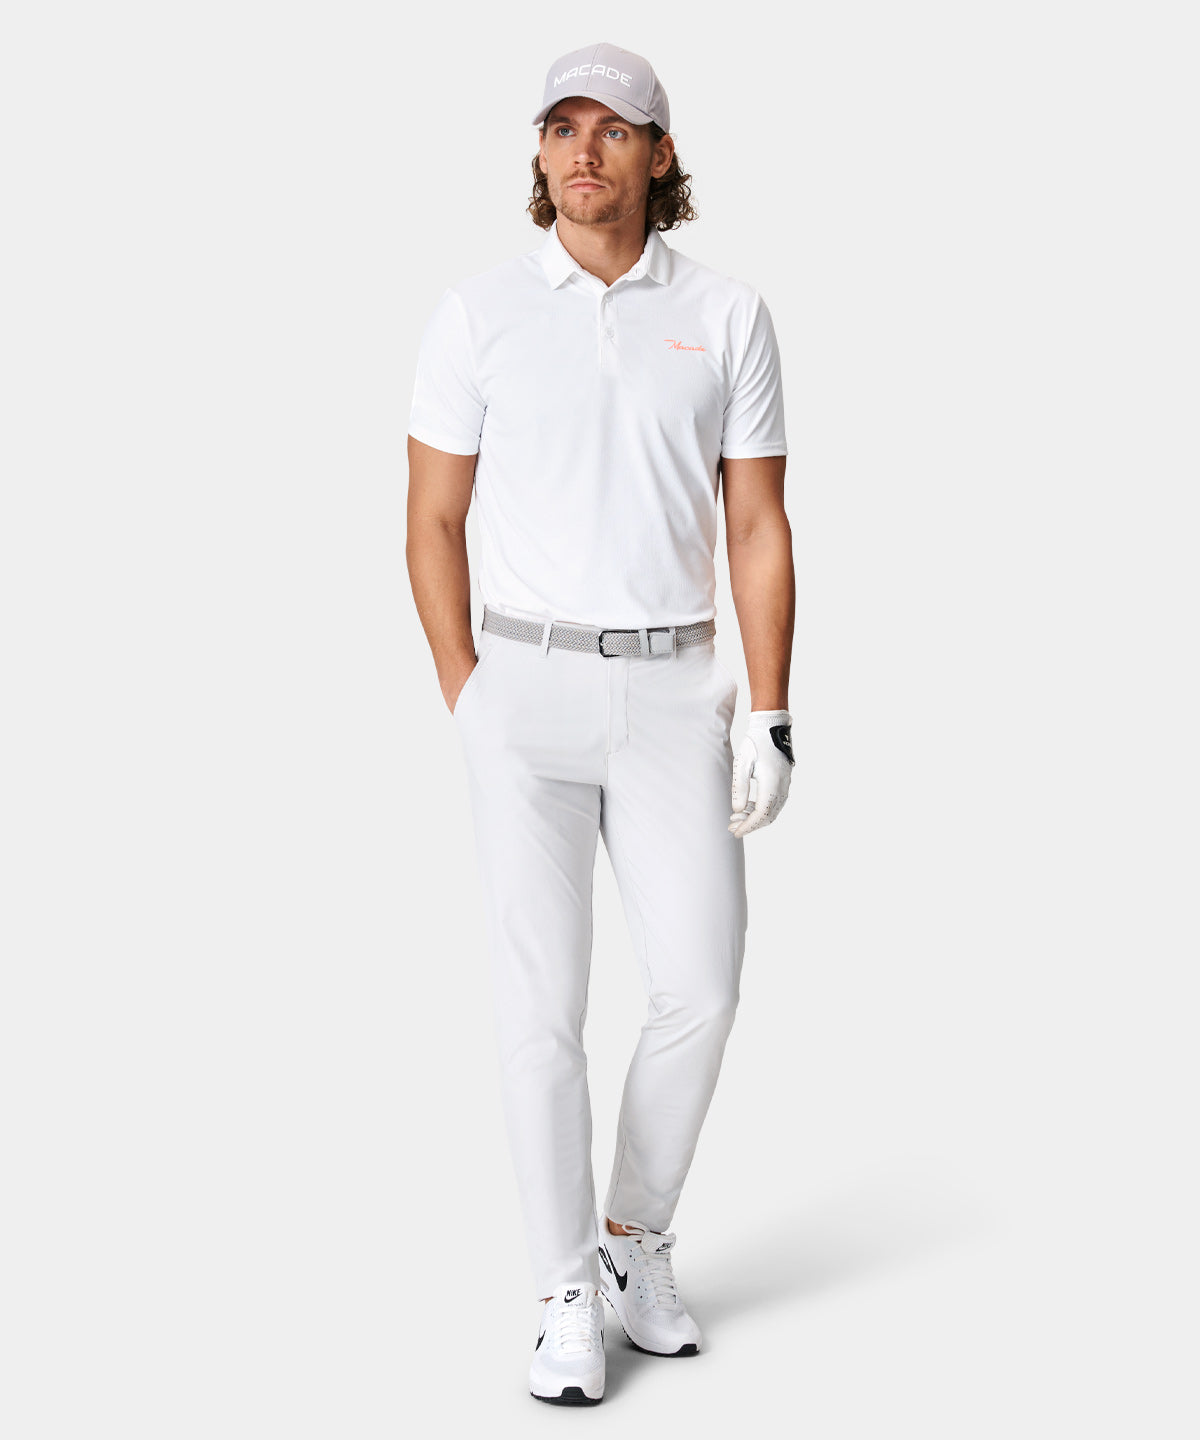 DEYANN Off White Color Dupion Silk Trousers for Men - Deyann